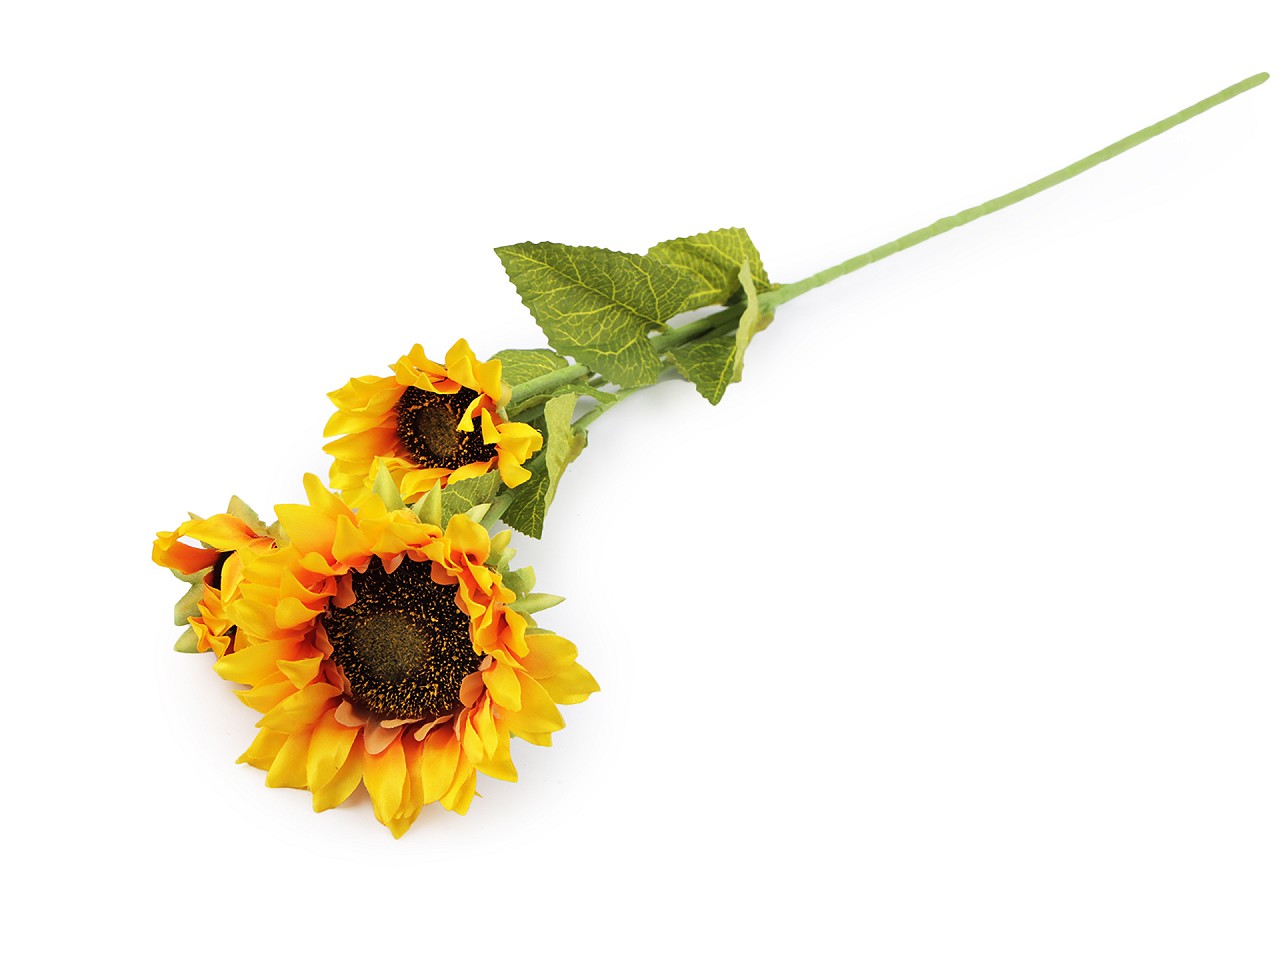 Textillux.sk - produkt Umelá slnečnica s tromi kvetmi